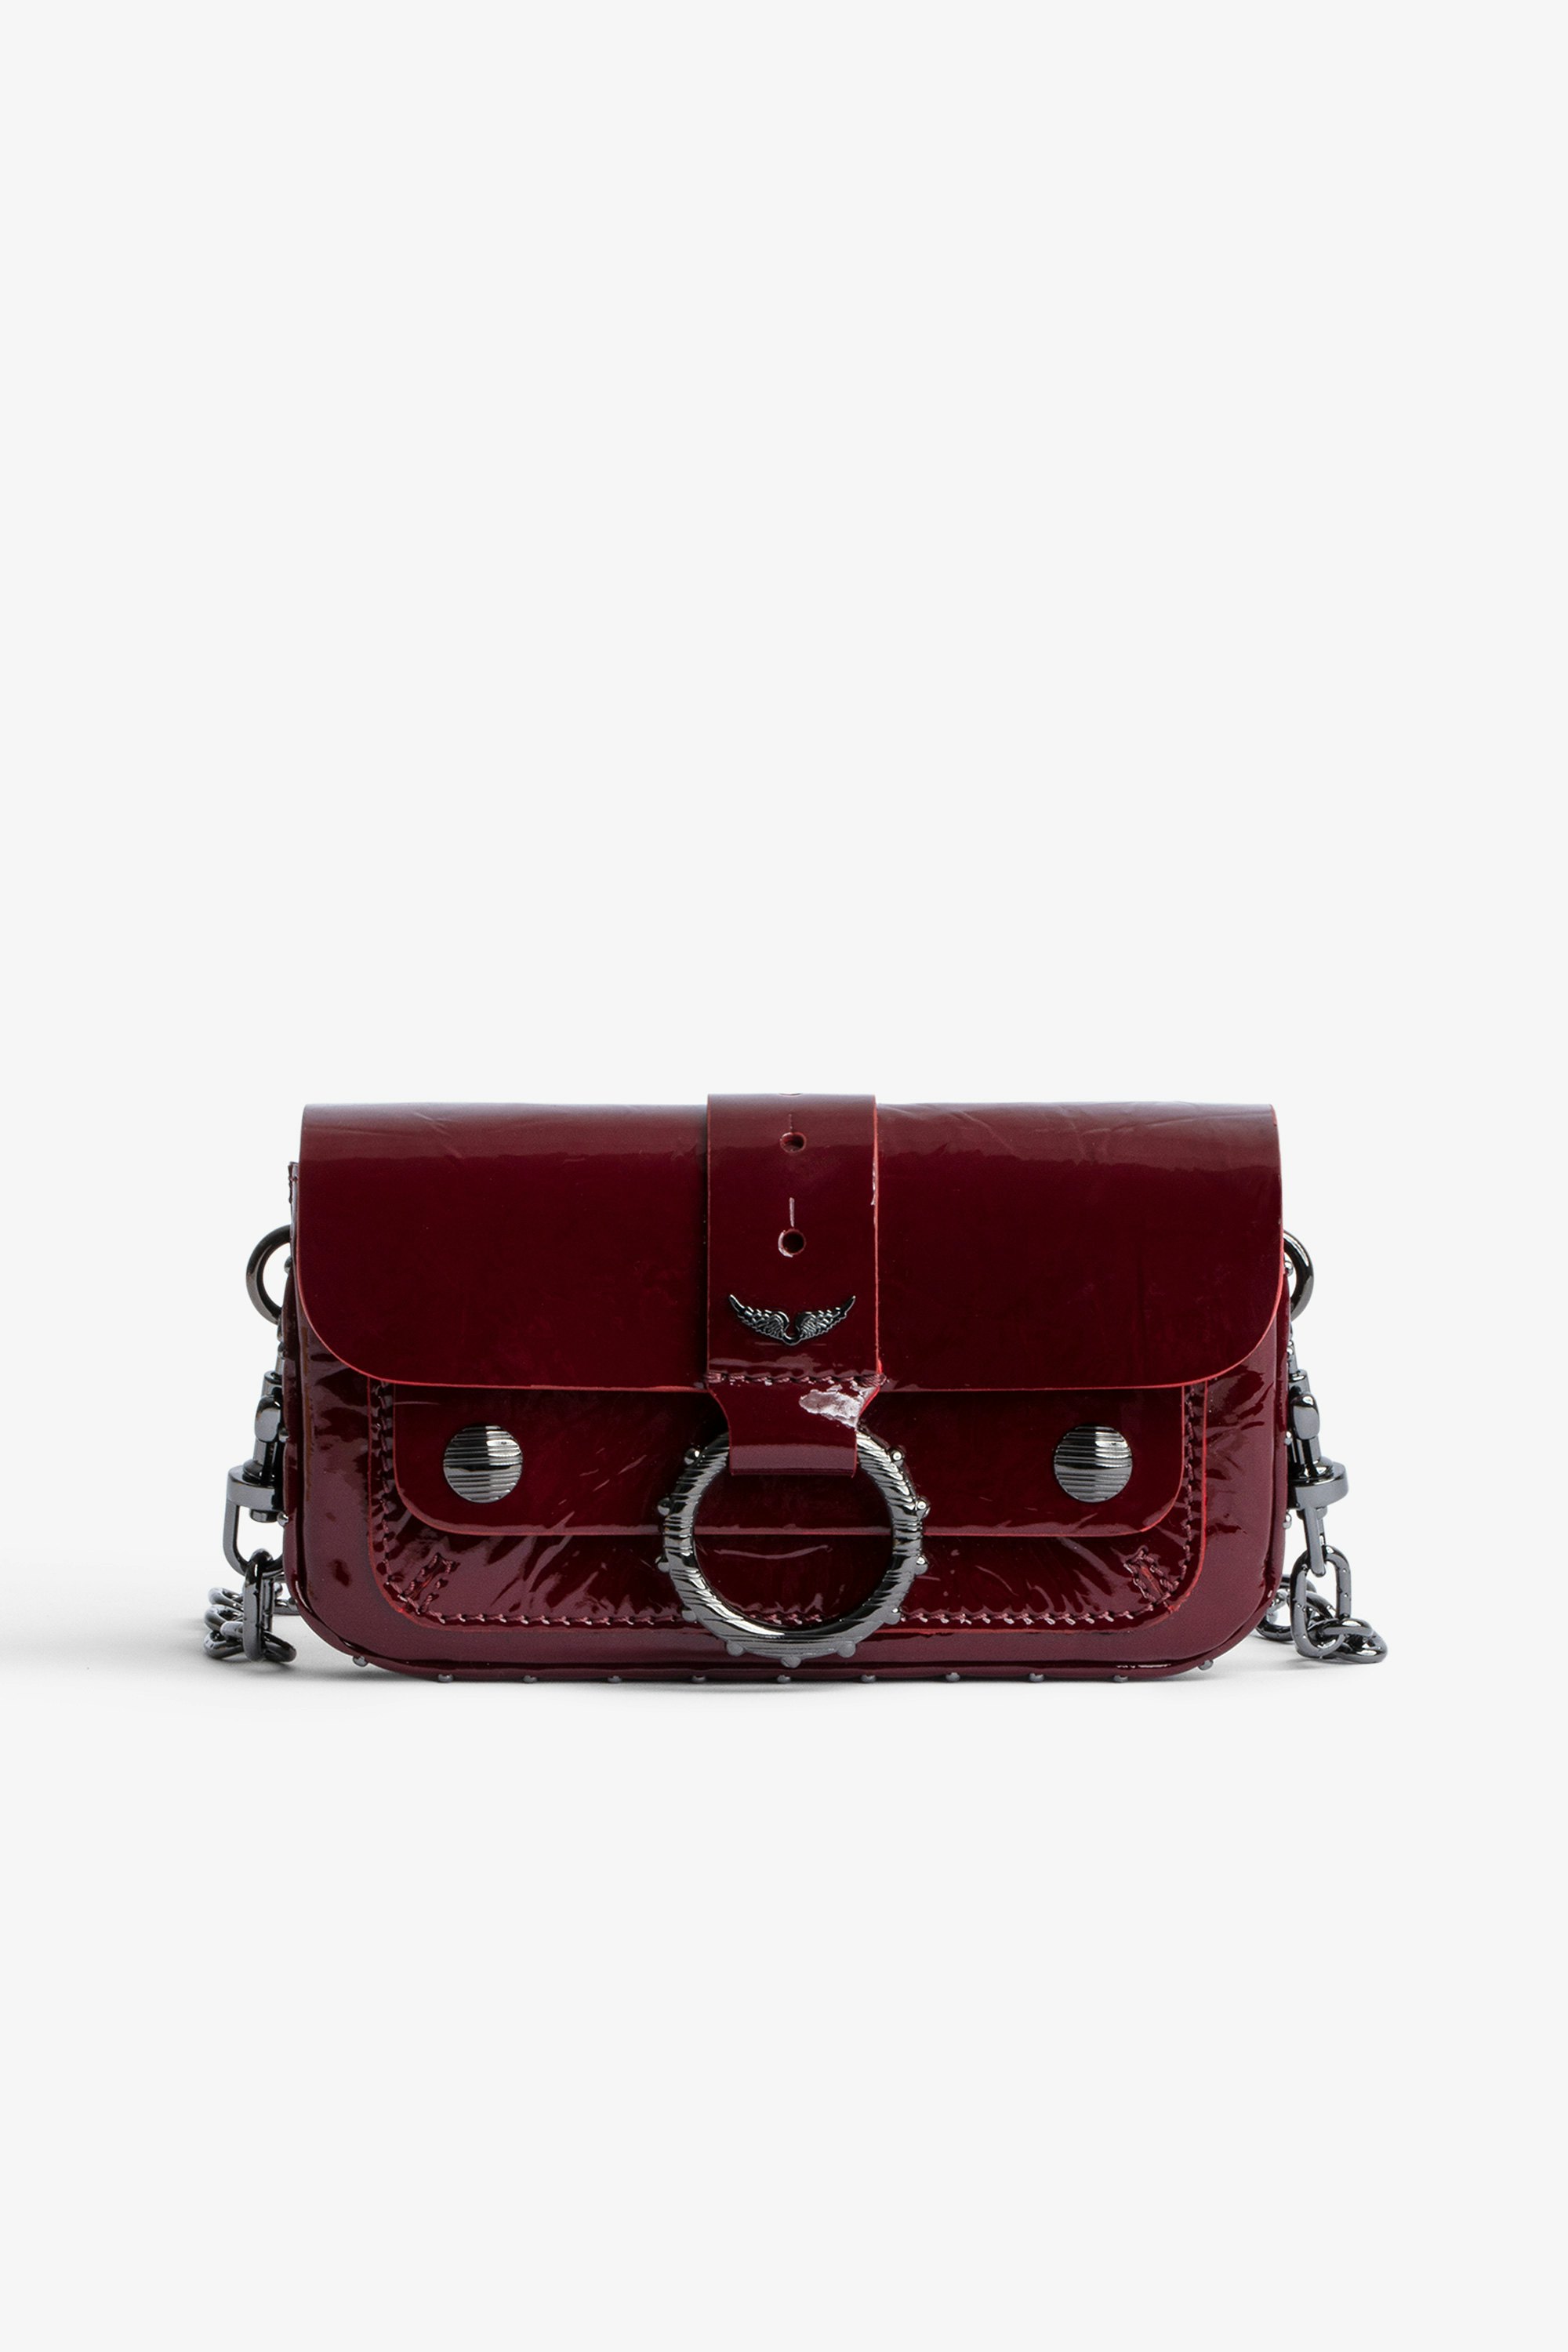 Kate Wallet Wrinkle Bag Burgundy patent leather bag with shoulder strap and flap